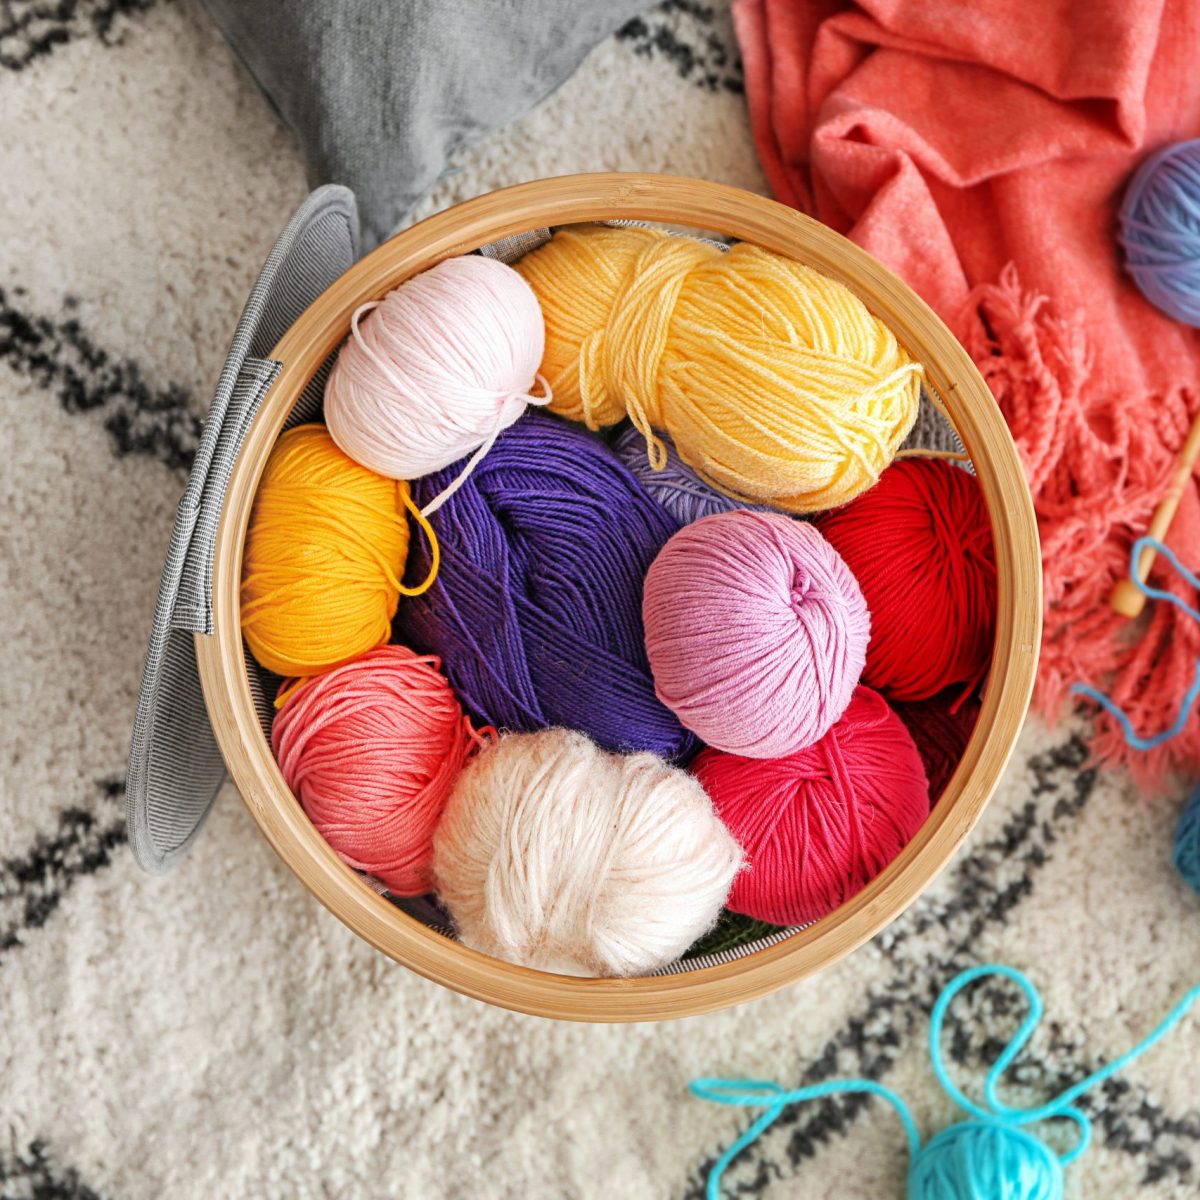 Looen Yarn Storage Knitting Tote Organizer Bag, Large Capacity